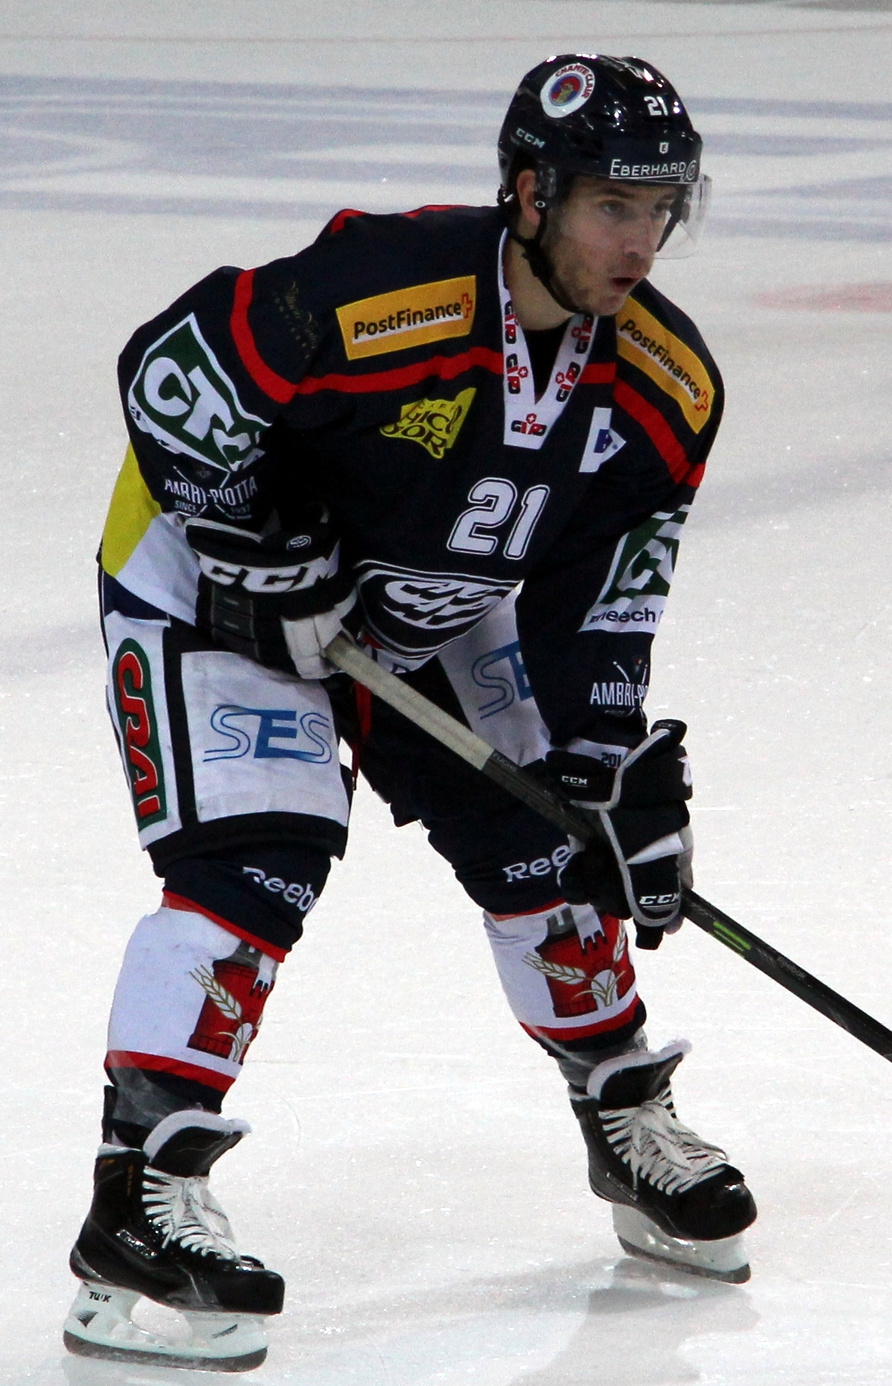 Jason Fuchs (Eishockeyspieler)